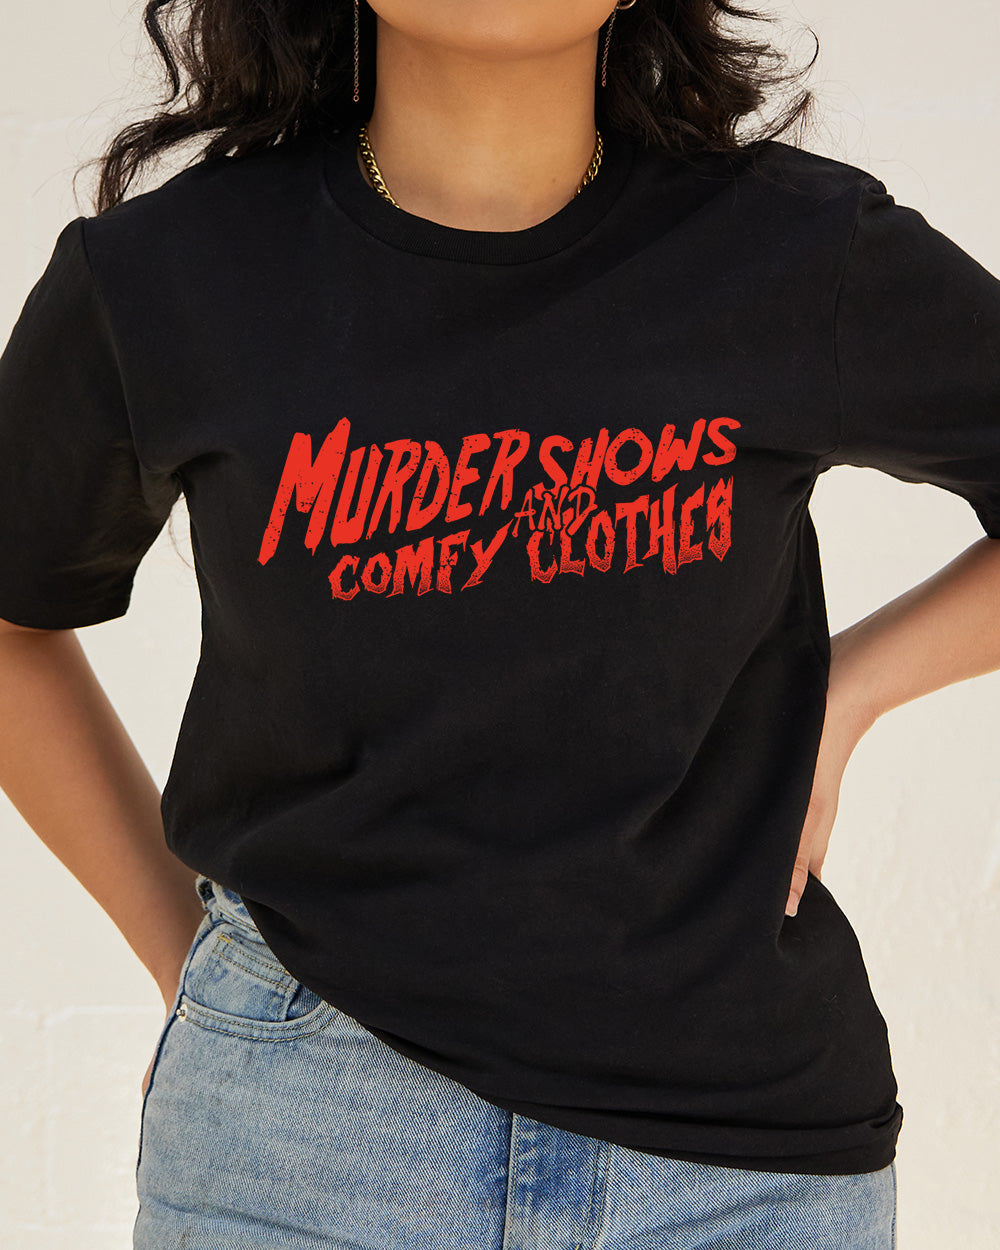 Murder Shows and Comfy Clothes T-Shirt Australia Online Black